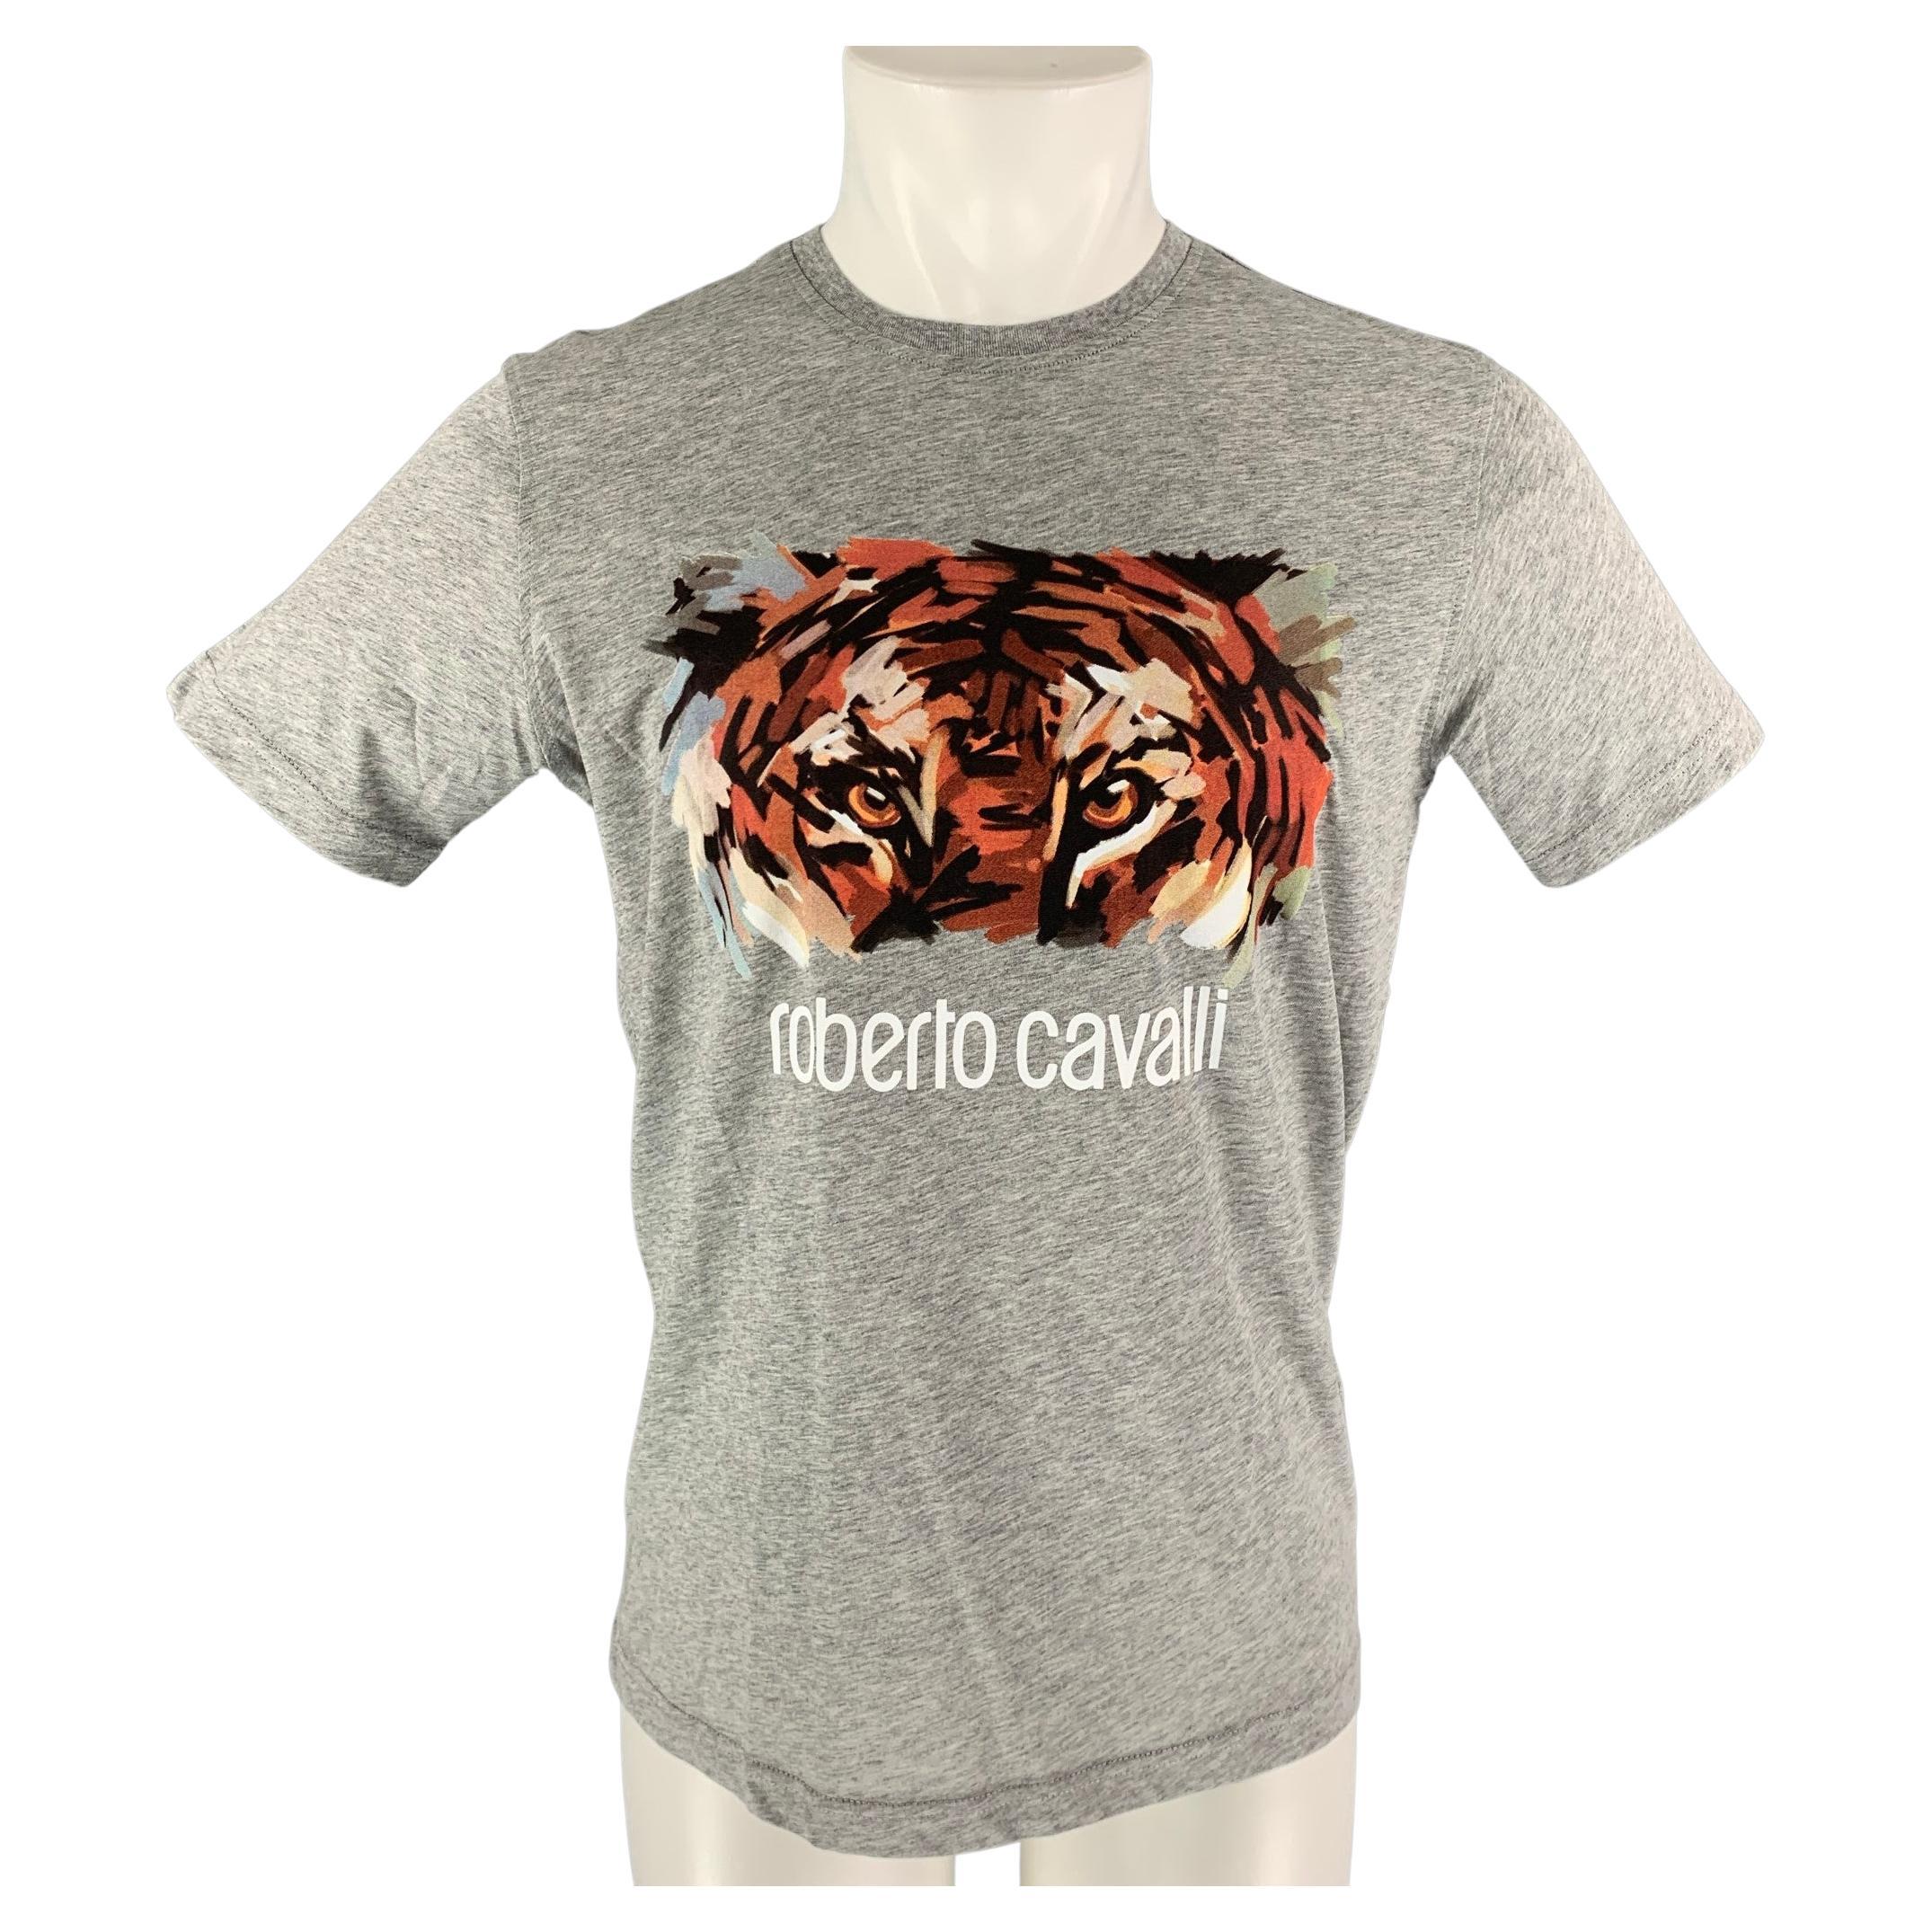 Roberto Cavalli Size Large Tiger Graphic Crew Neck Cotton T-Shirt Black 